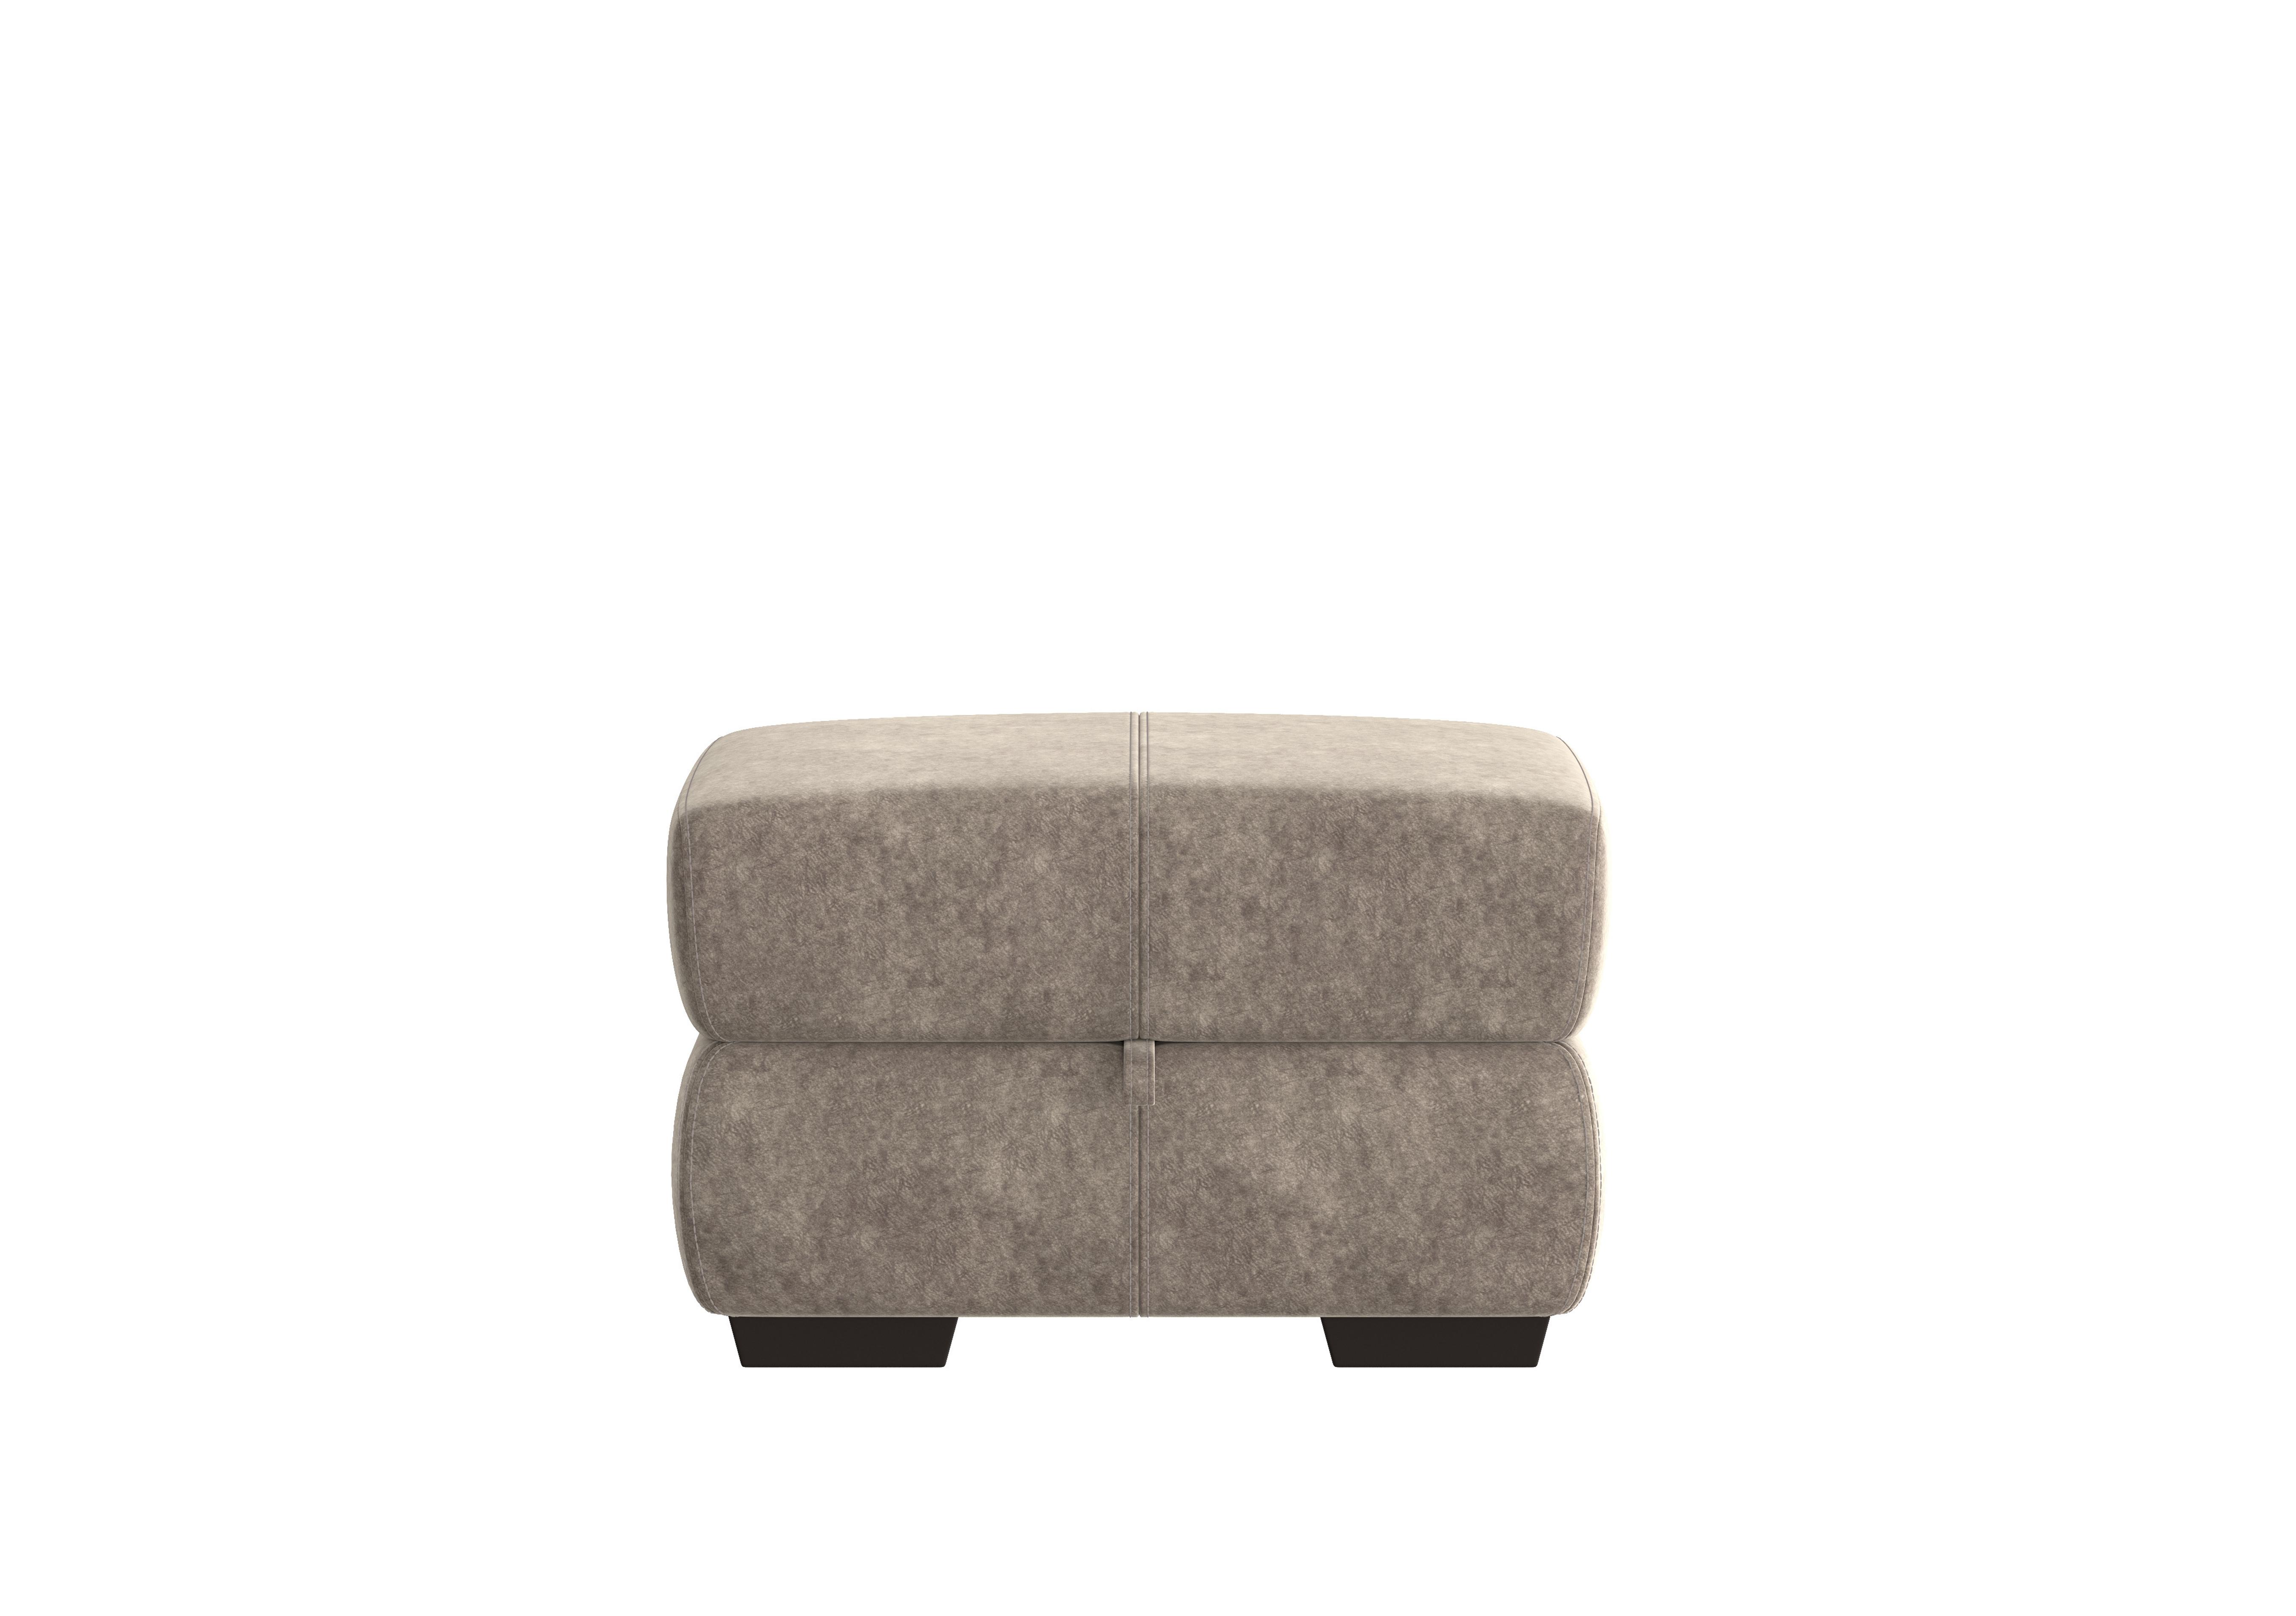 Elixir Fabric Storage Footstool in Bfa-Bnn-R29 Fv1 Mink on Furniture Village